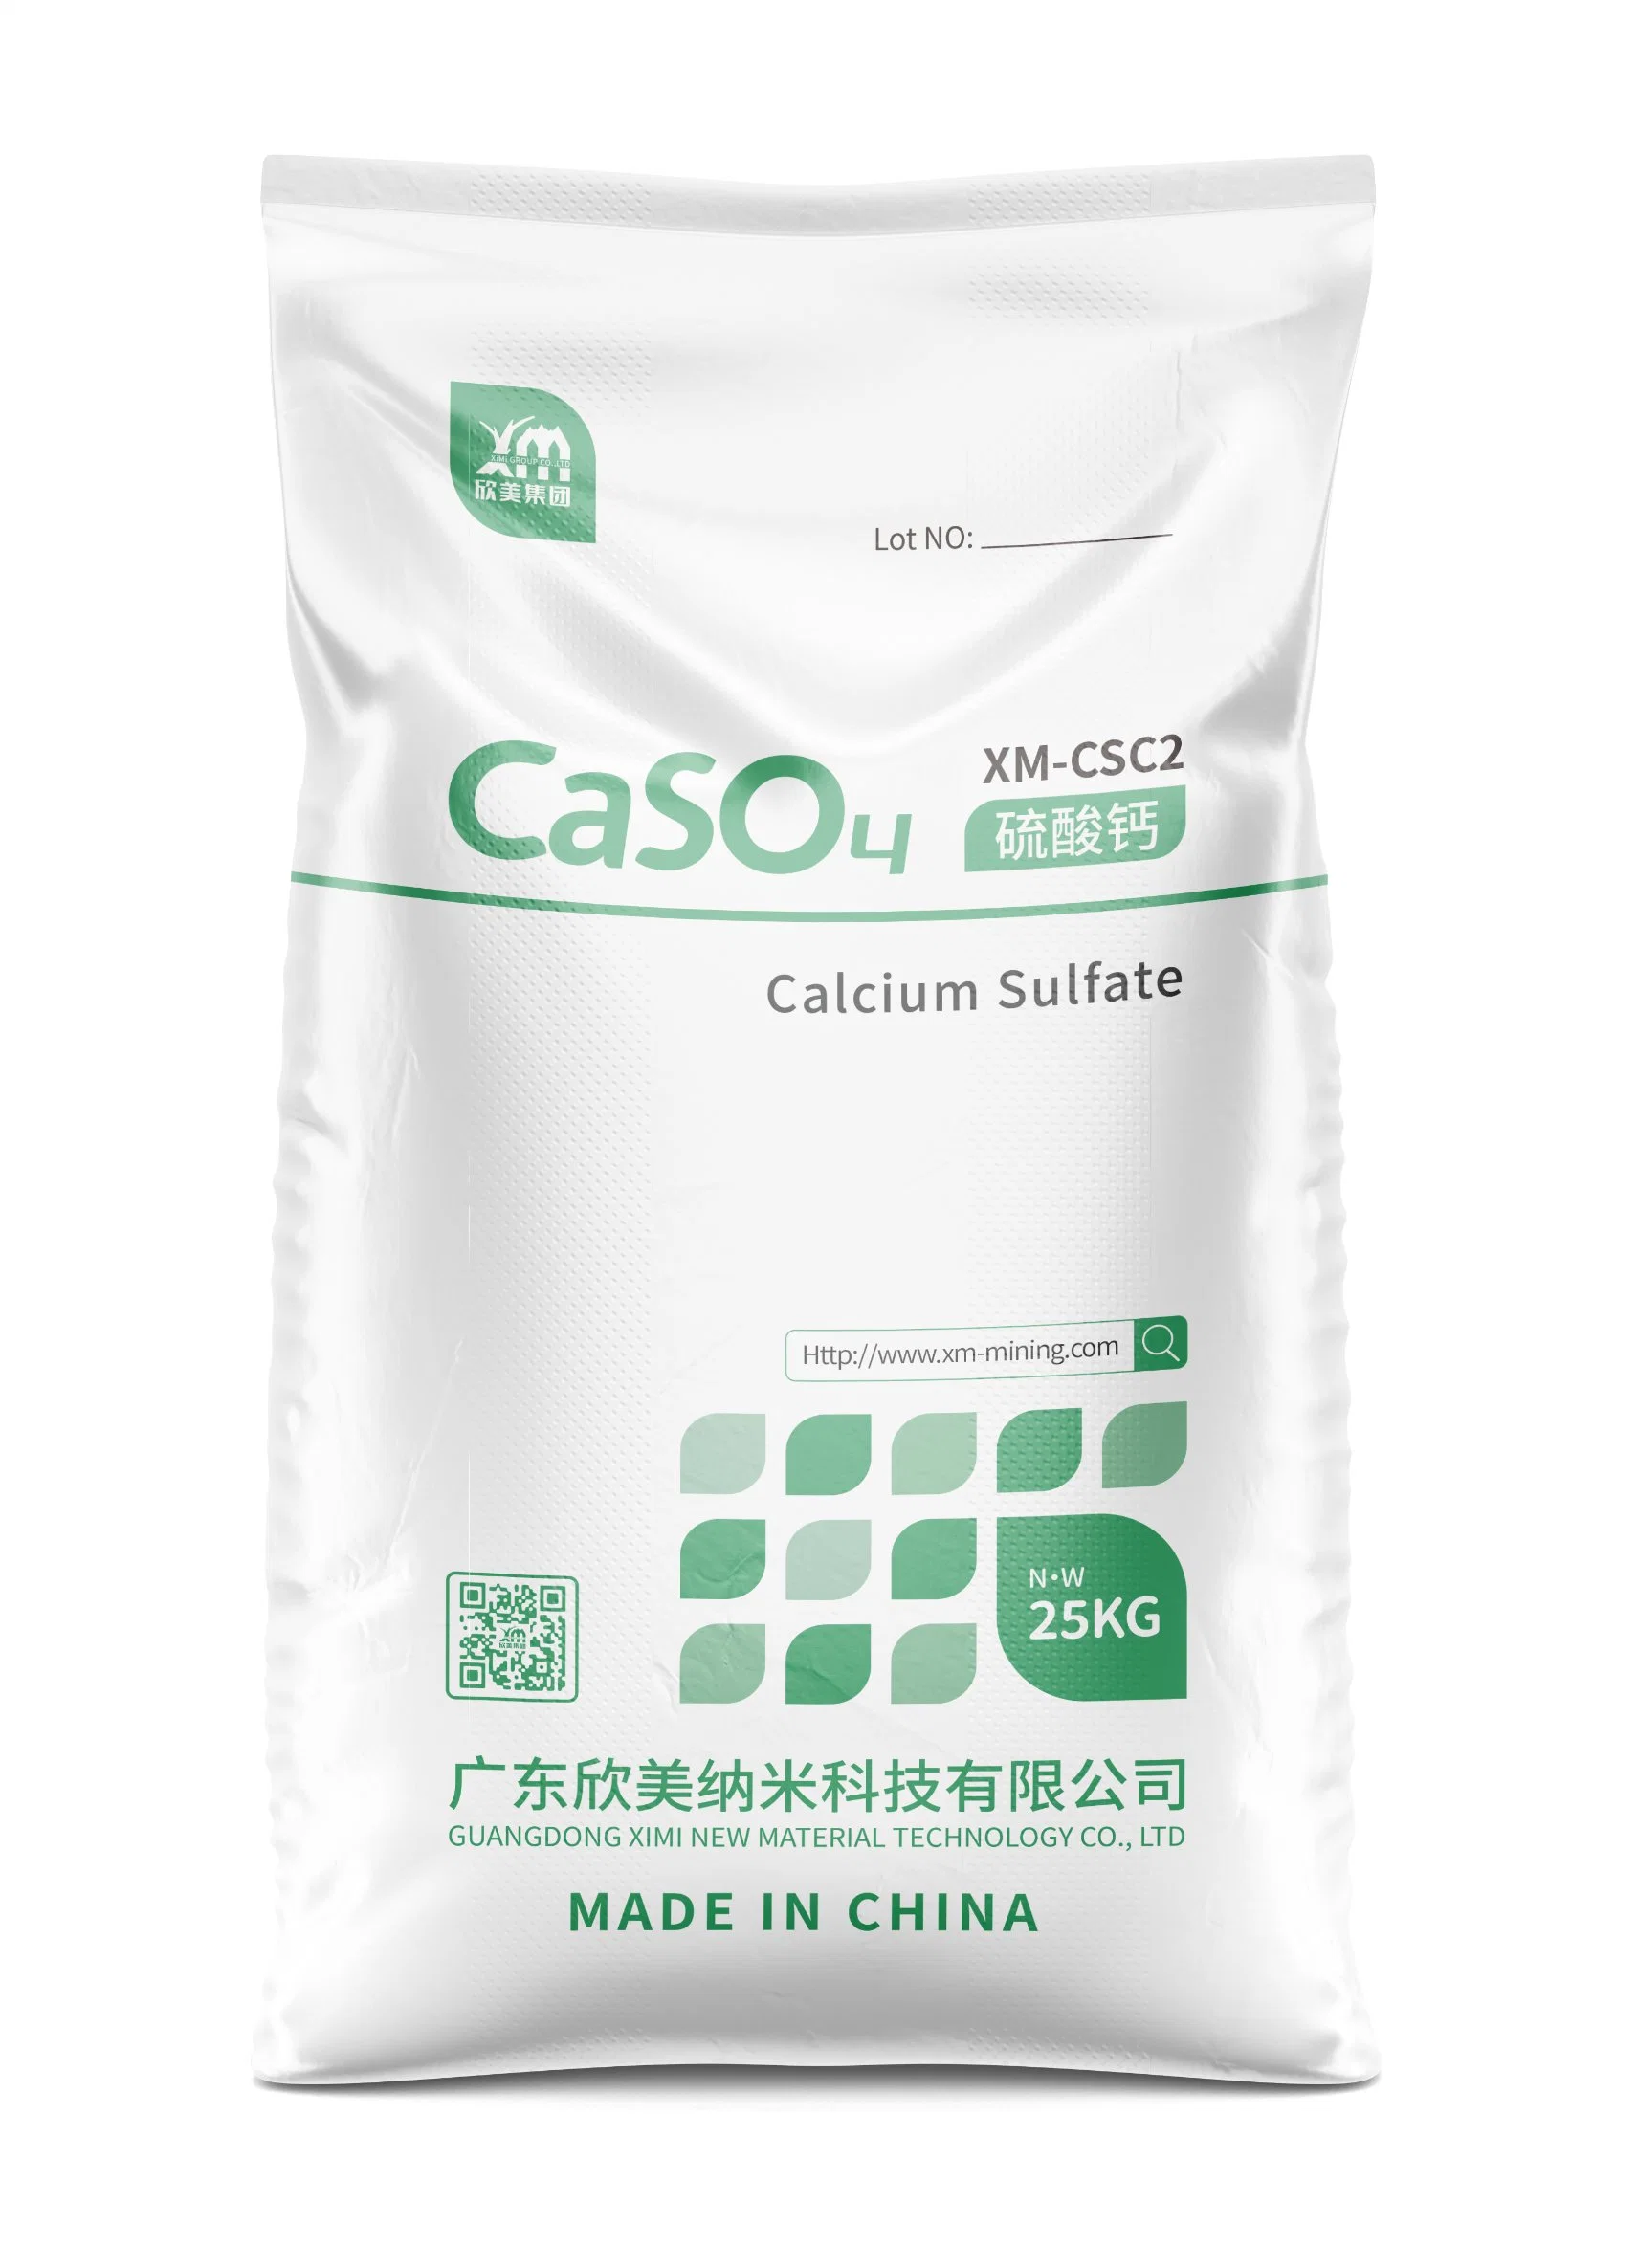 Caso4 Calcium Sulphate HS 2833299090 for Rubber Paint Plastic Application